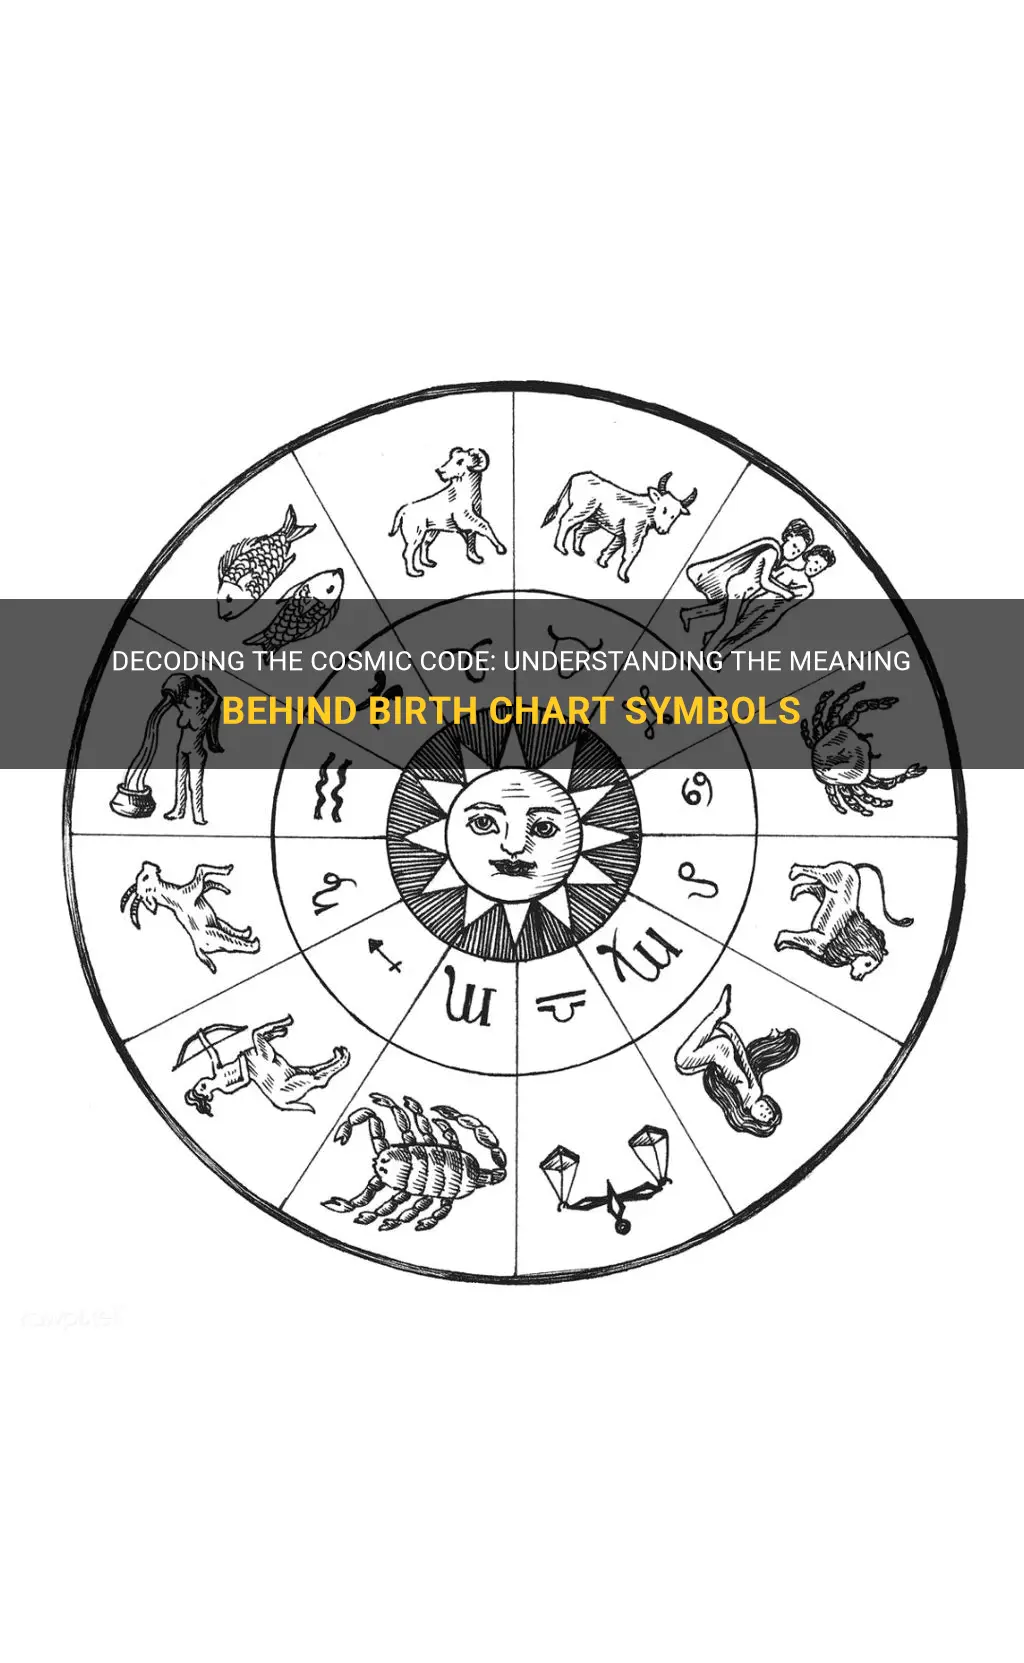 birth chart symbols meaning